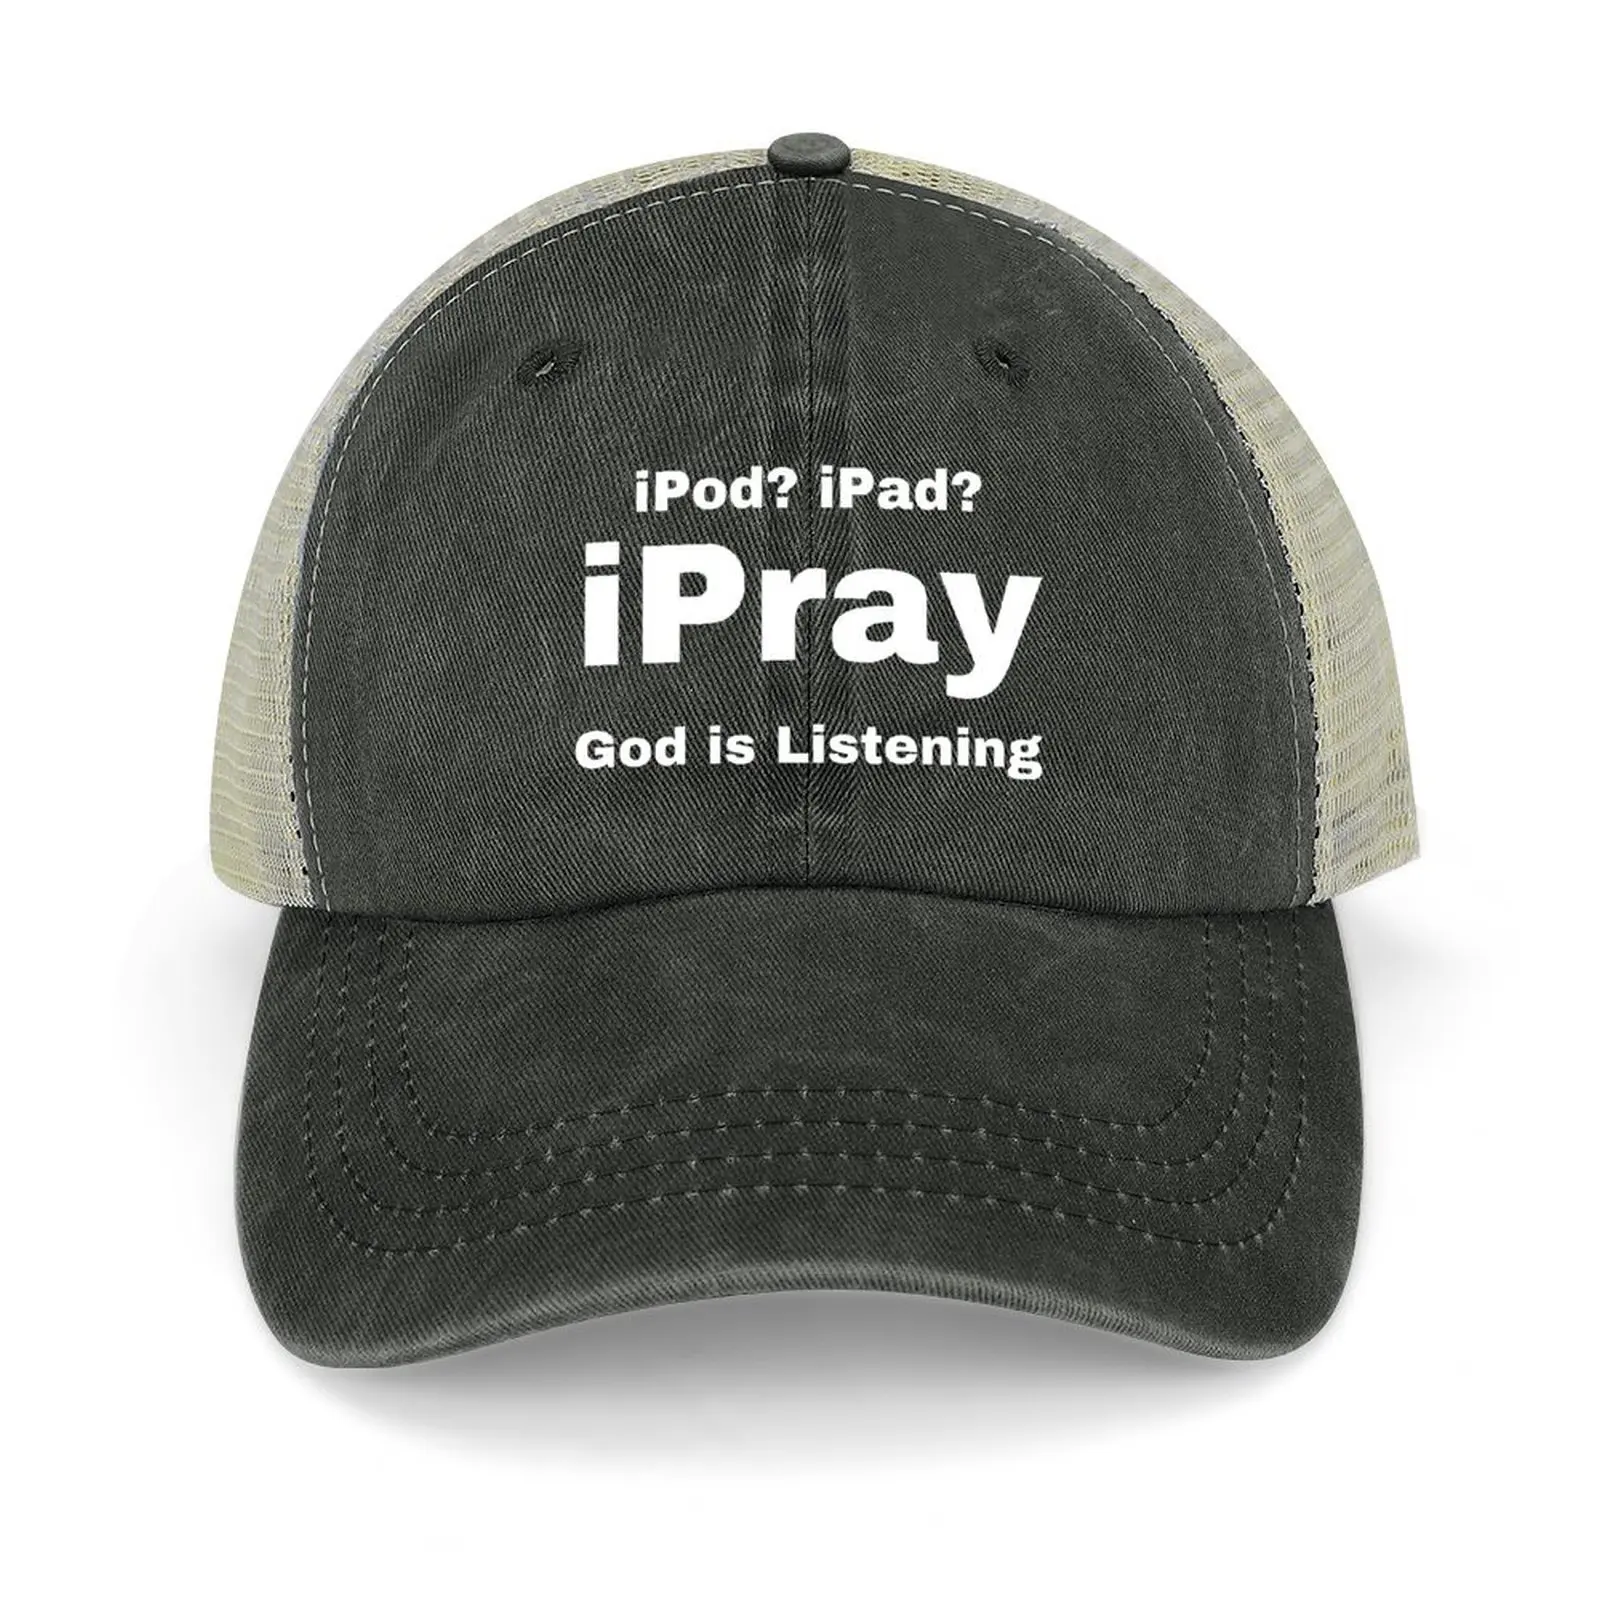 

iPod iPad iPray God is Listening. Cowboy Hat Custom Cap Horse Hat For Girls Men's